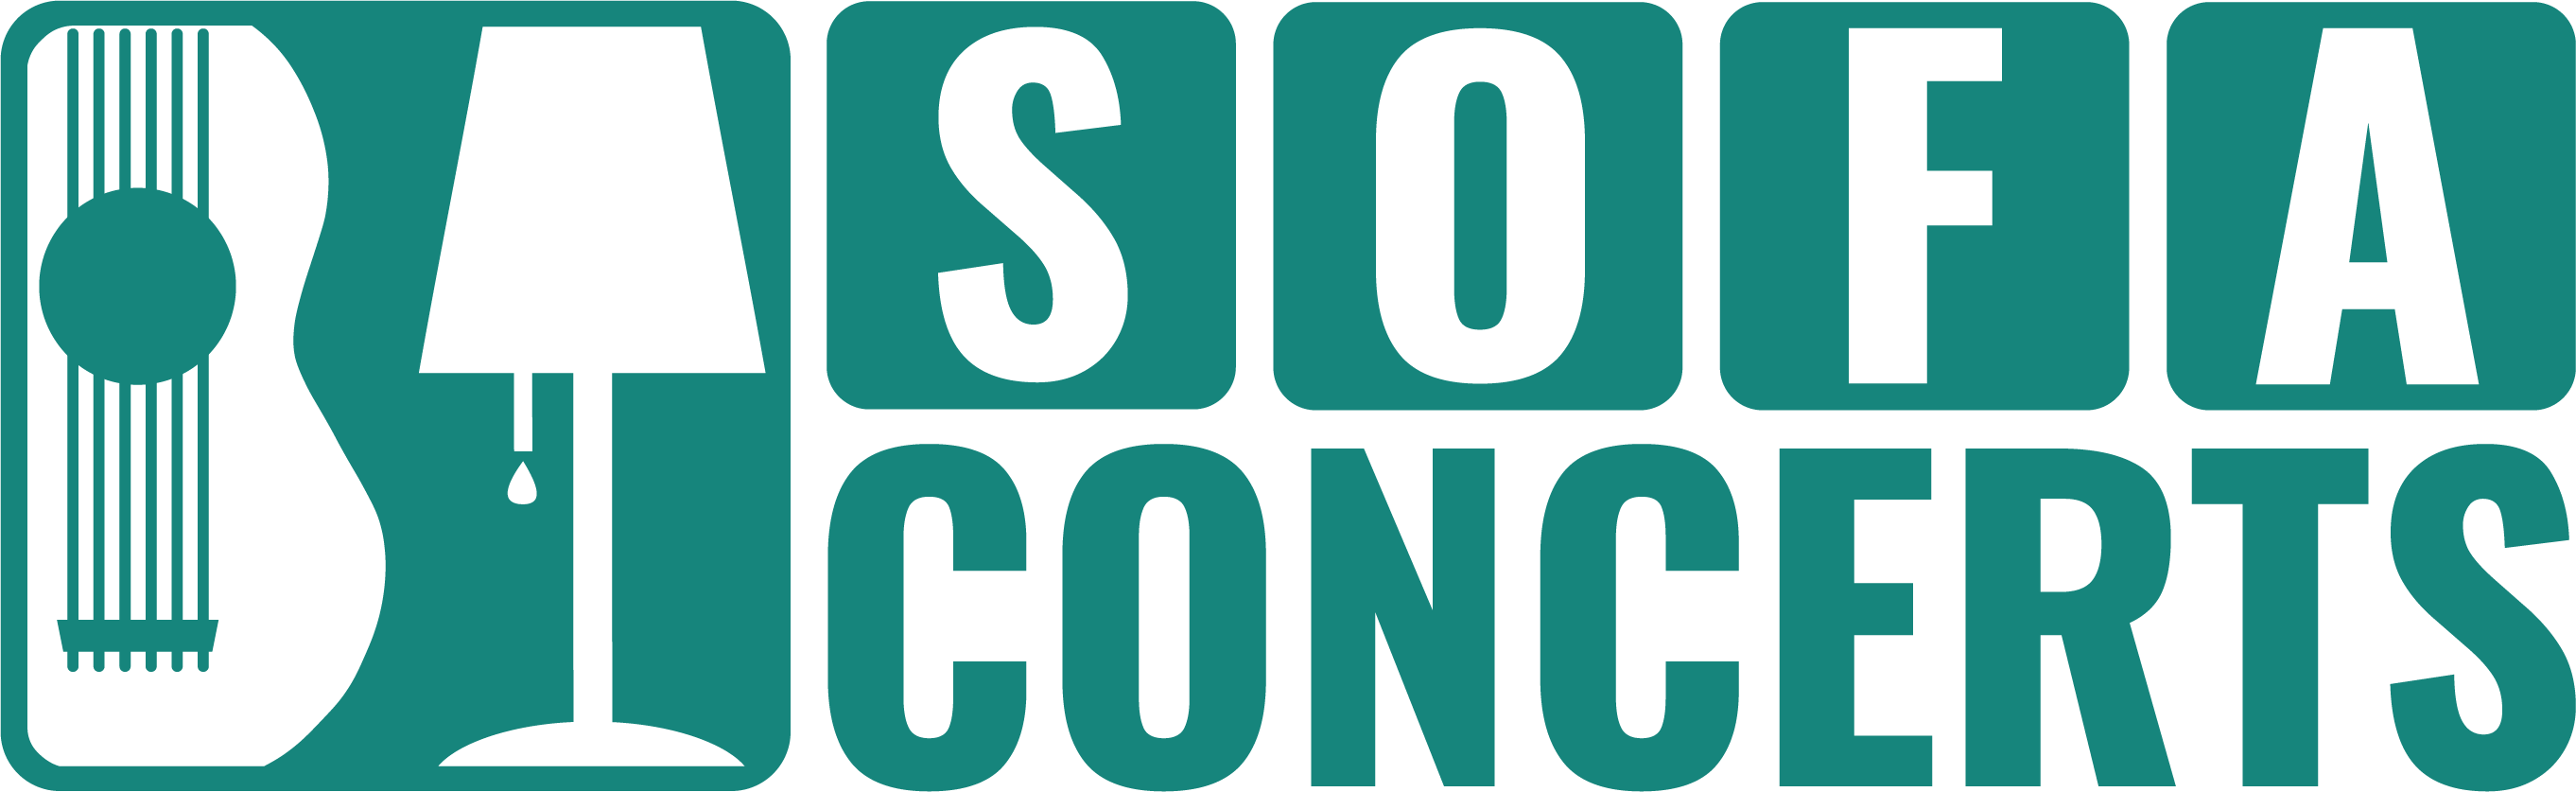 SofaConcerts_Logo_grün